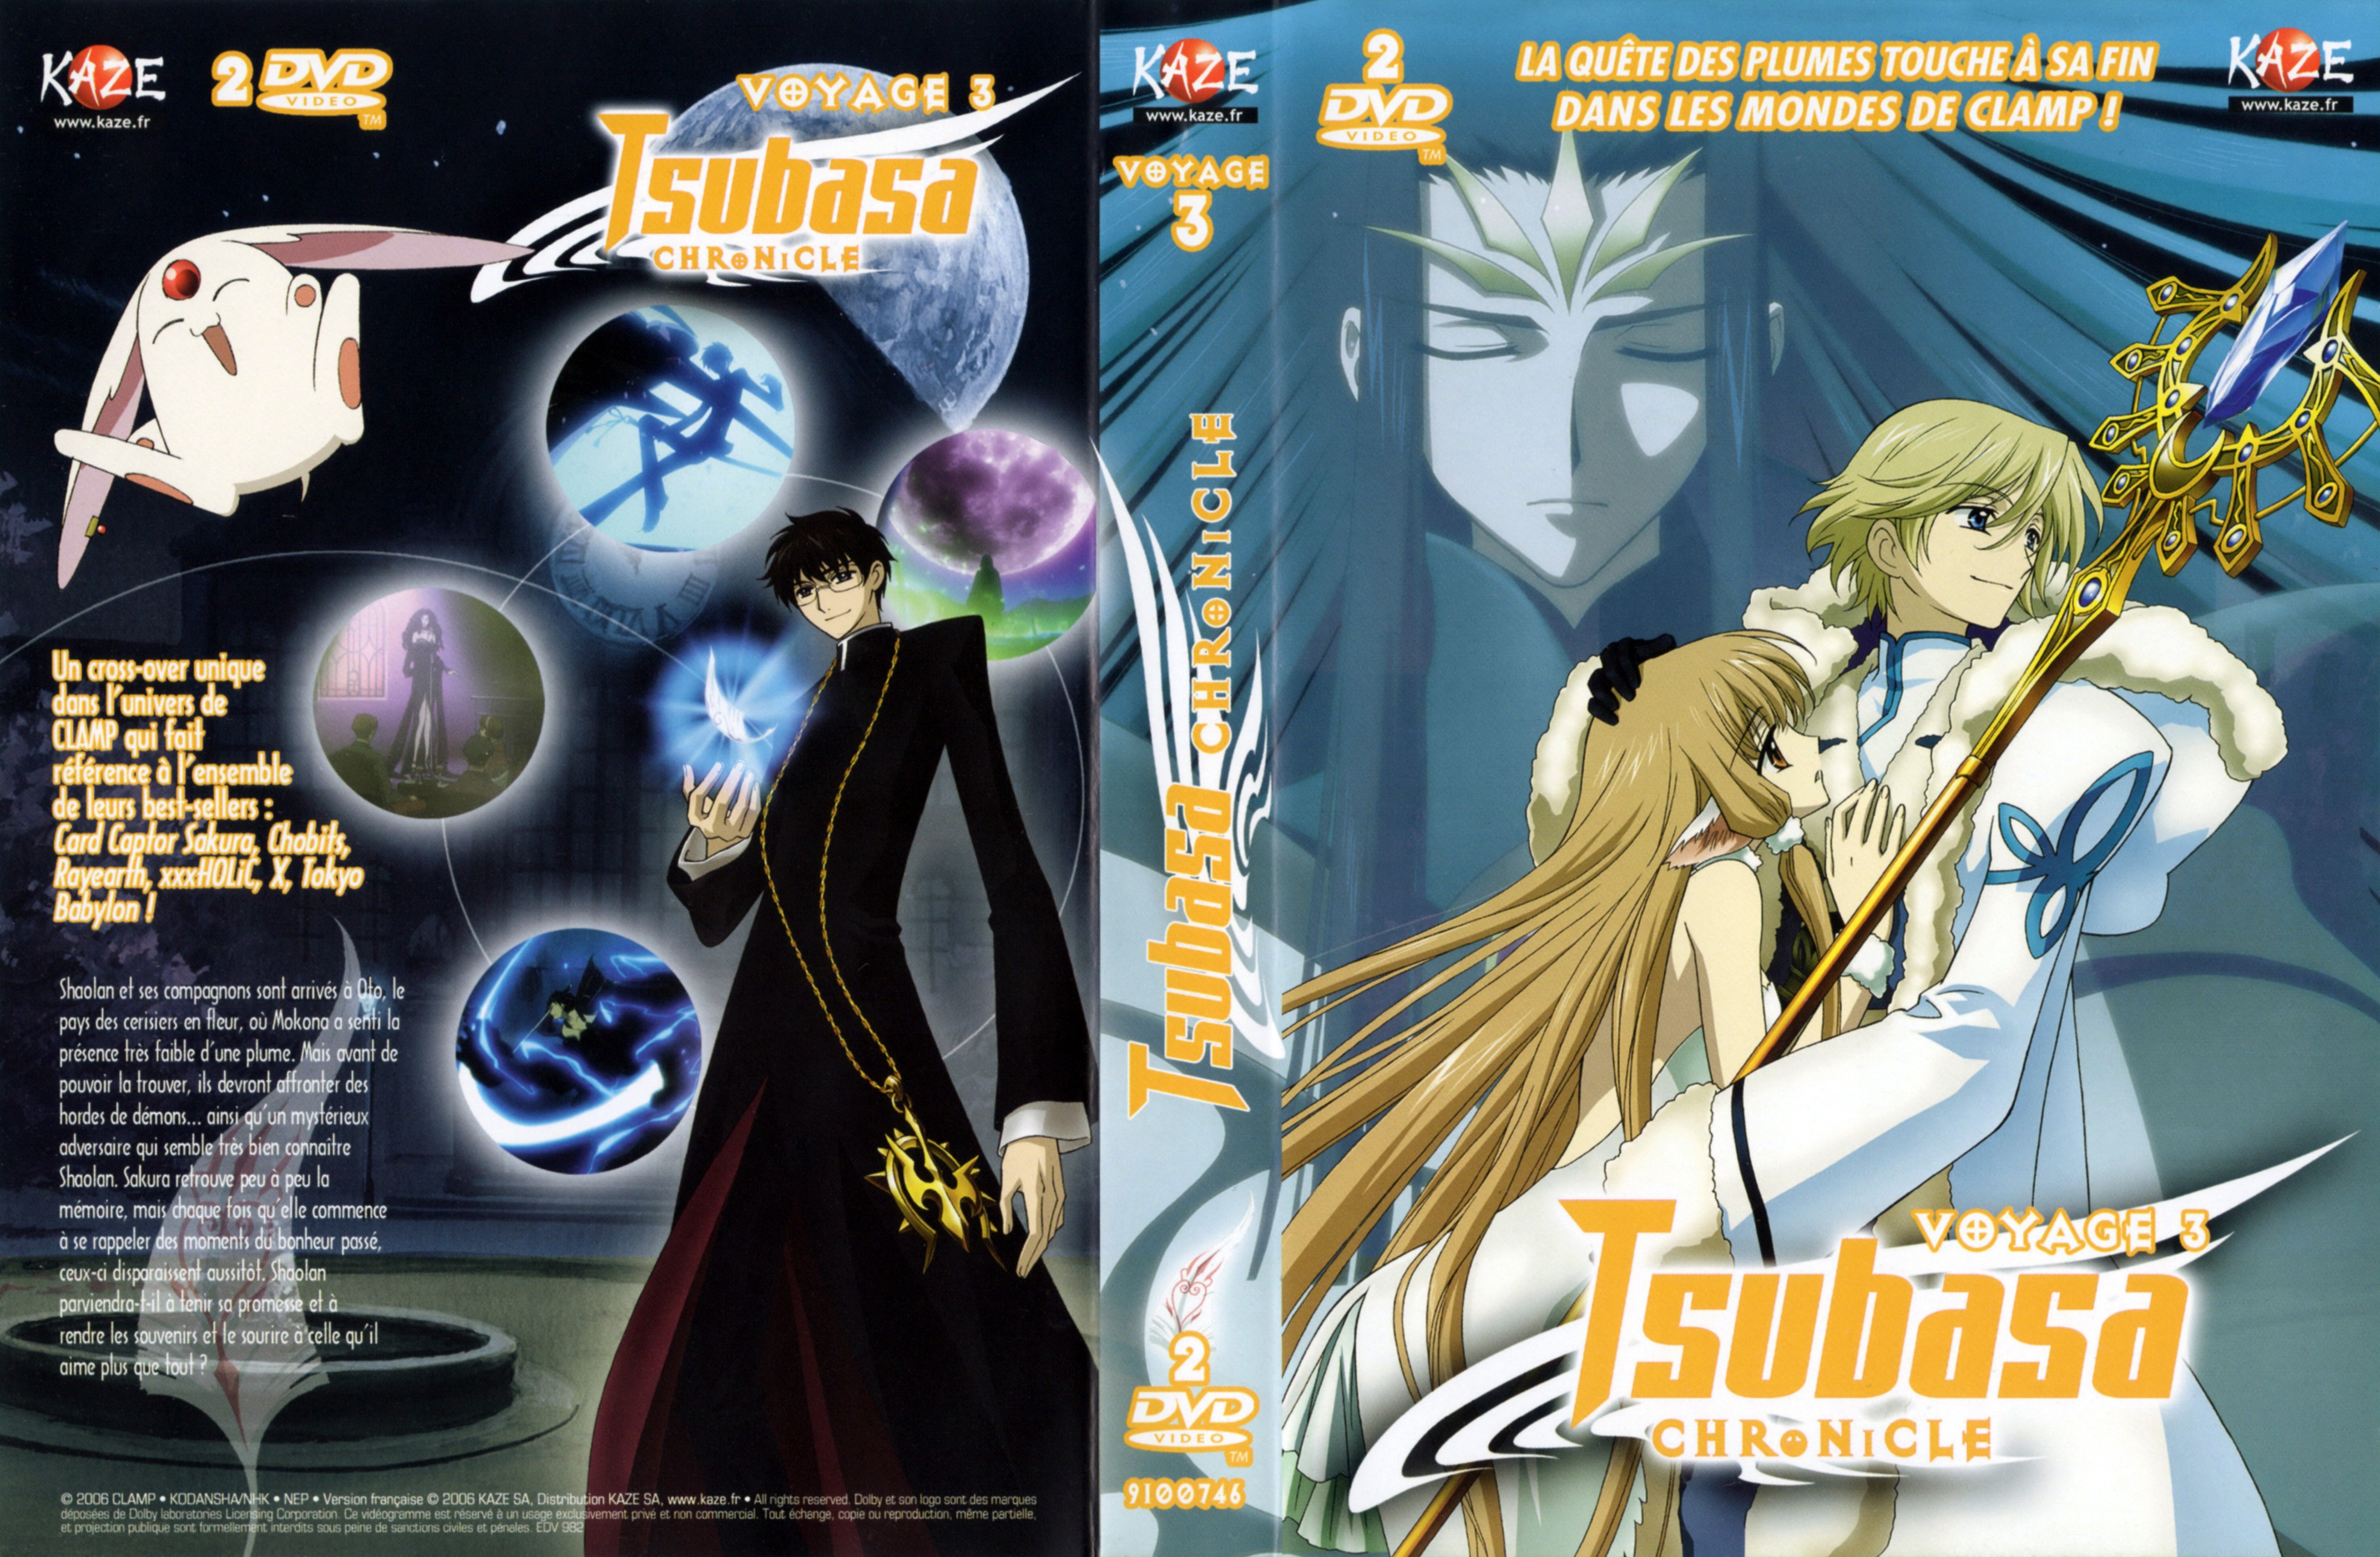 Jaquette DVD Tsubasa chronicle vol 3